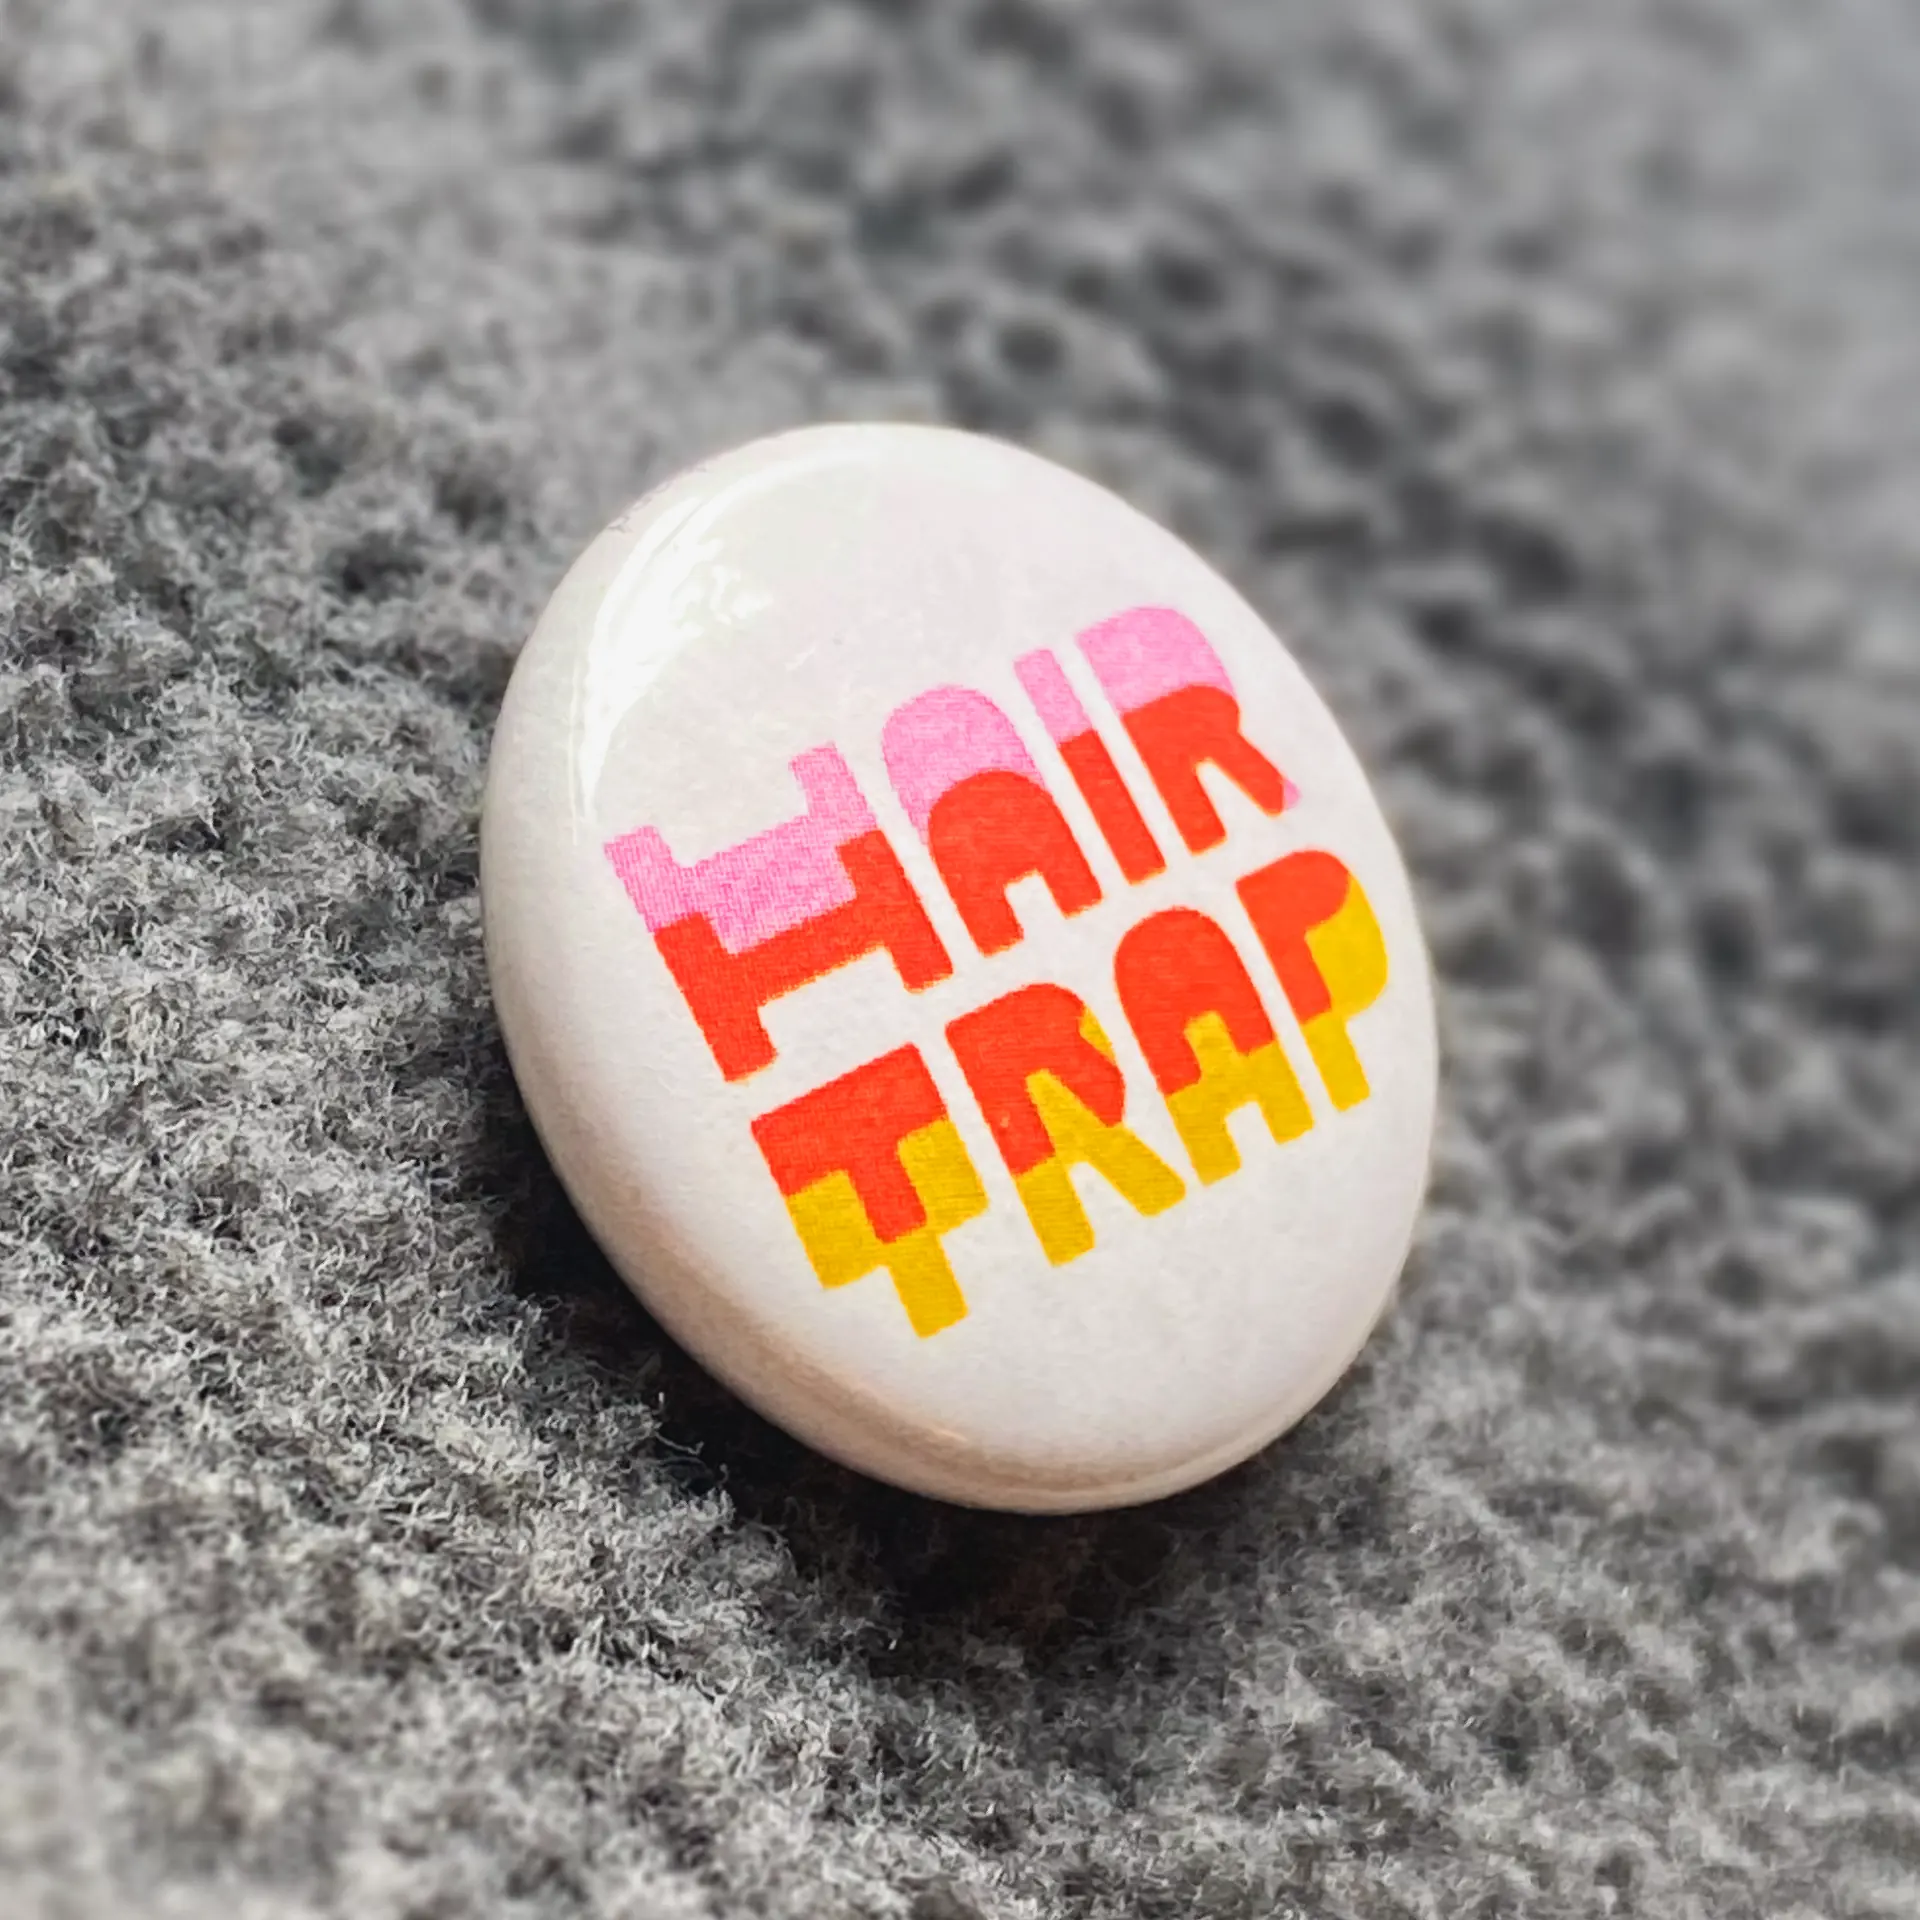 hair-trap-logo-button-1920-03-1